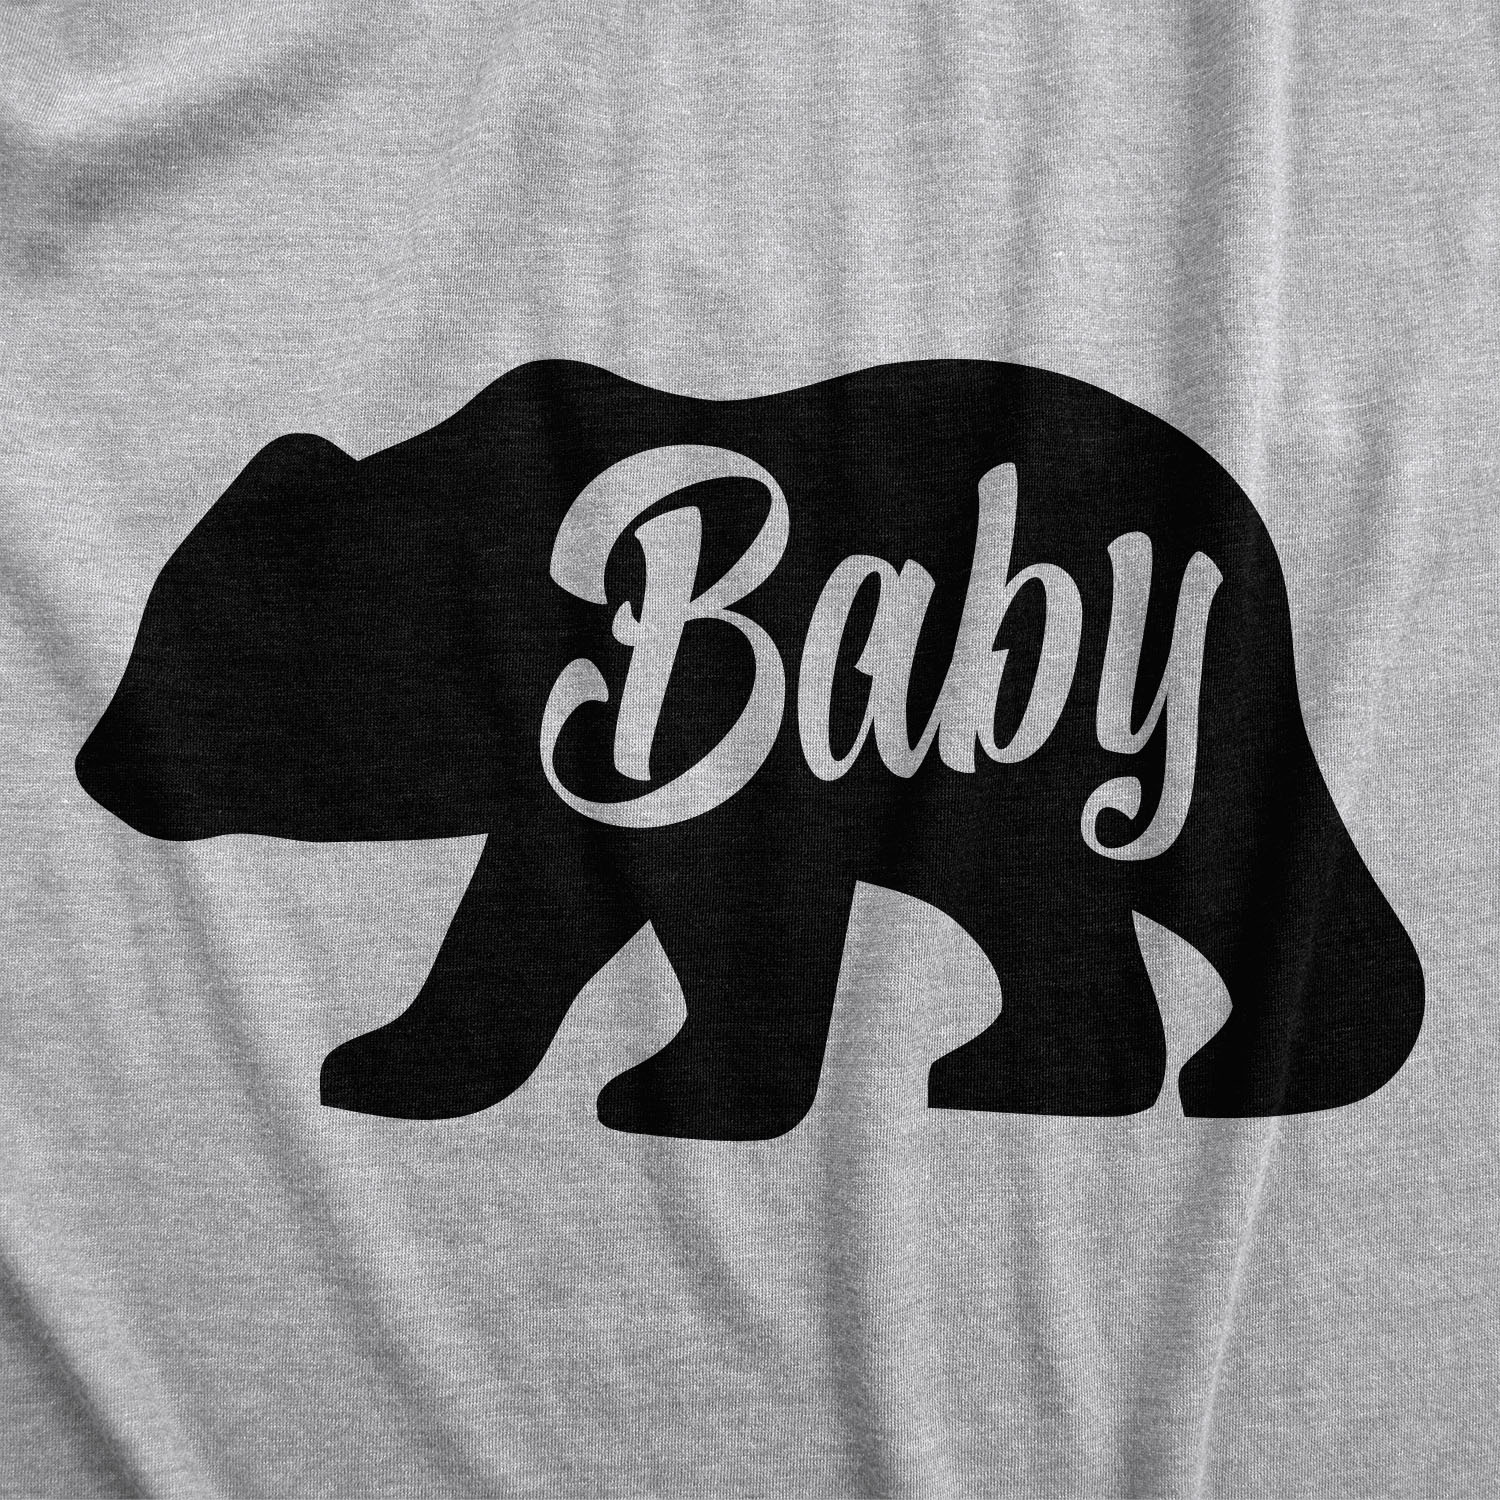 Crazy Dog Tshirts Baby Bear Funny Infant Shirts Cute Boy Girl Newborn Creeper for Family Bodysuit